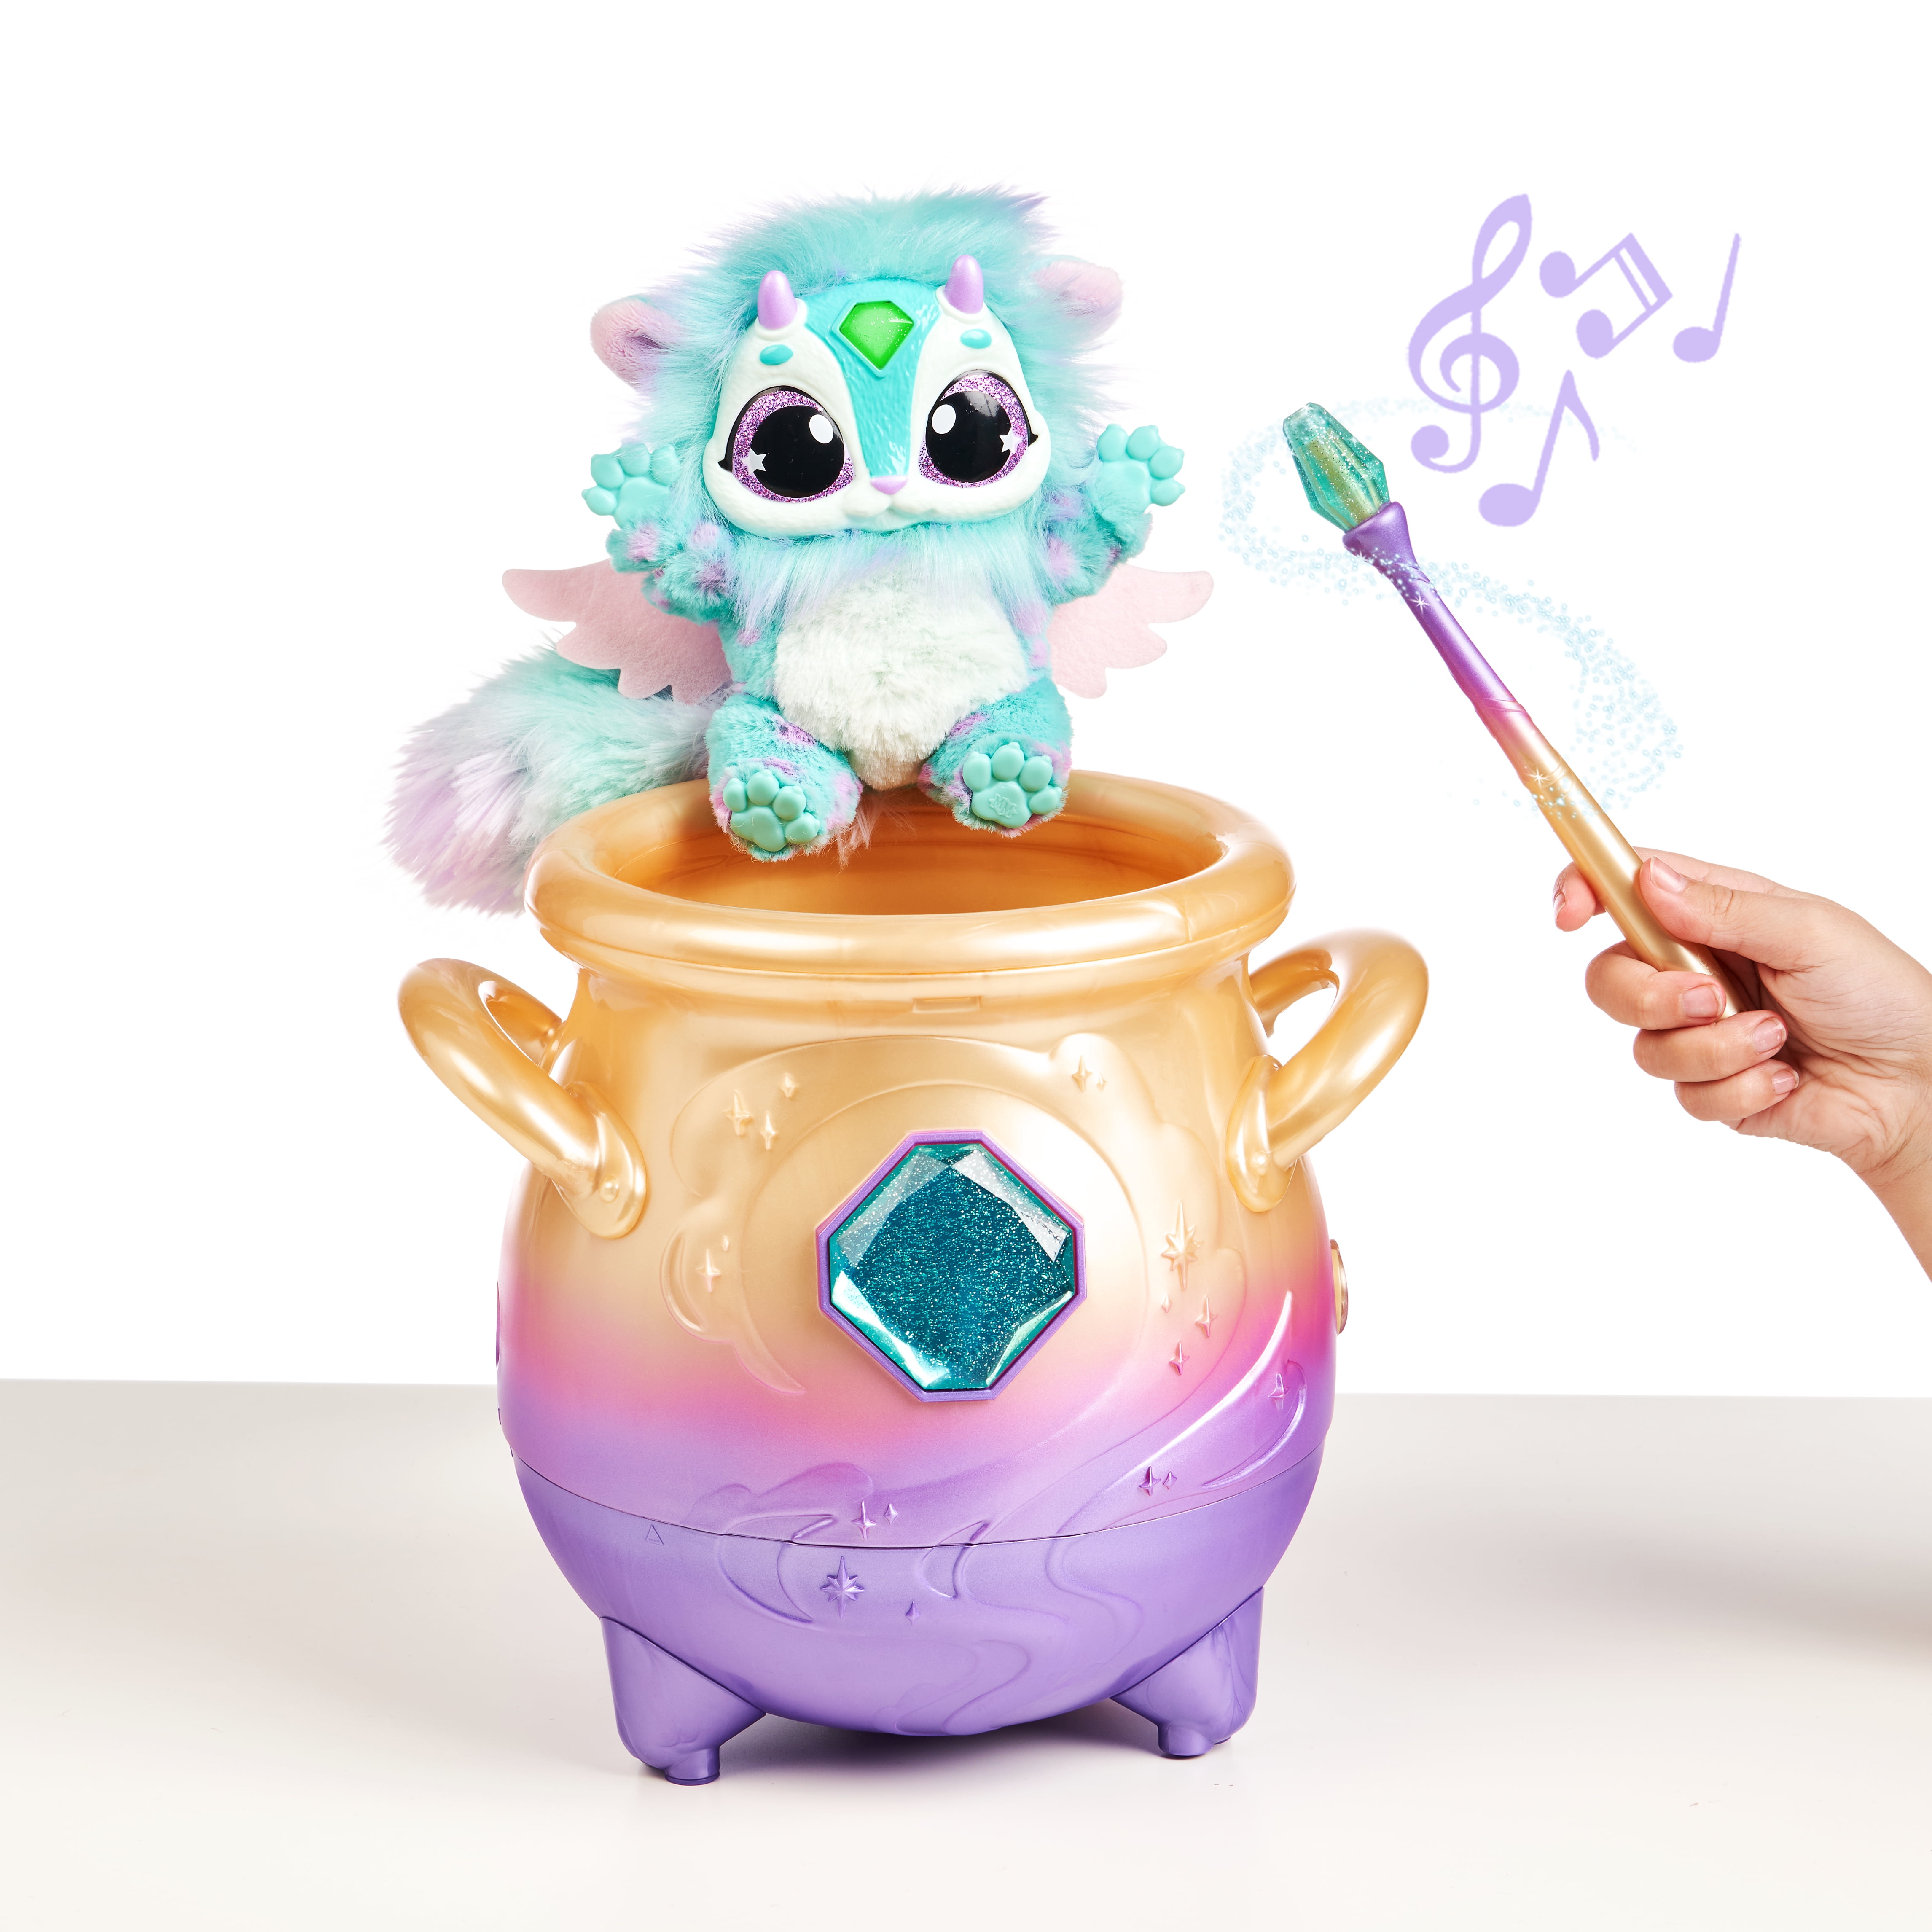 Jual Magic Mixies magical misting cauldron mix your potion pet - Kab.  Tangerang - Littlepiggyid